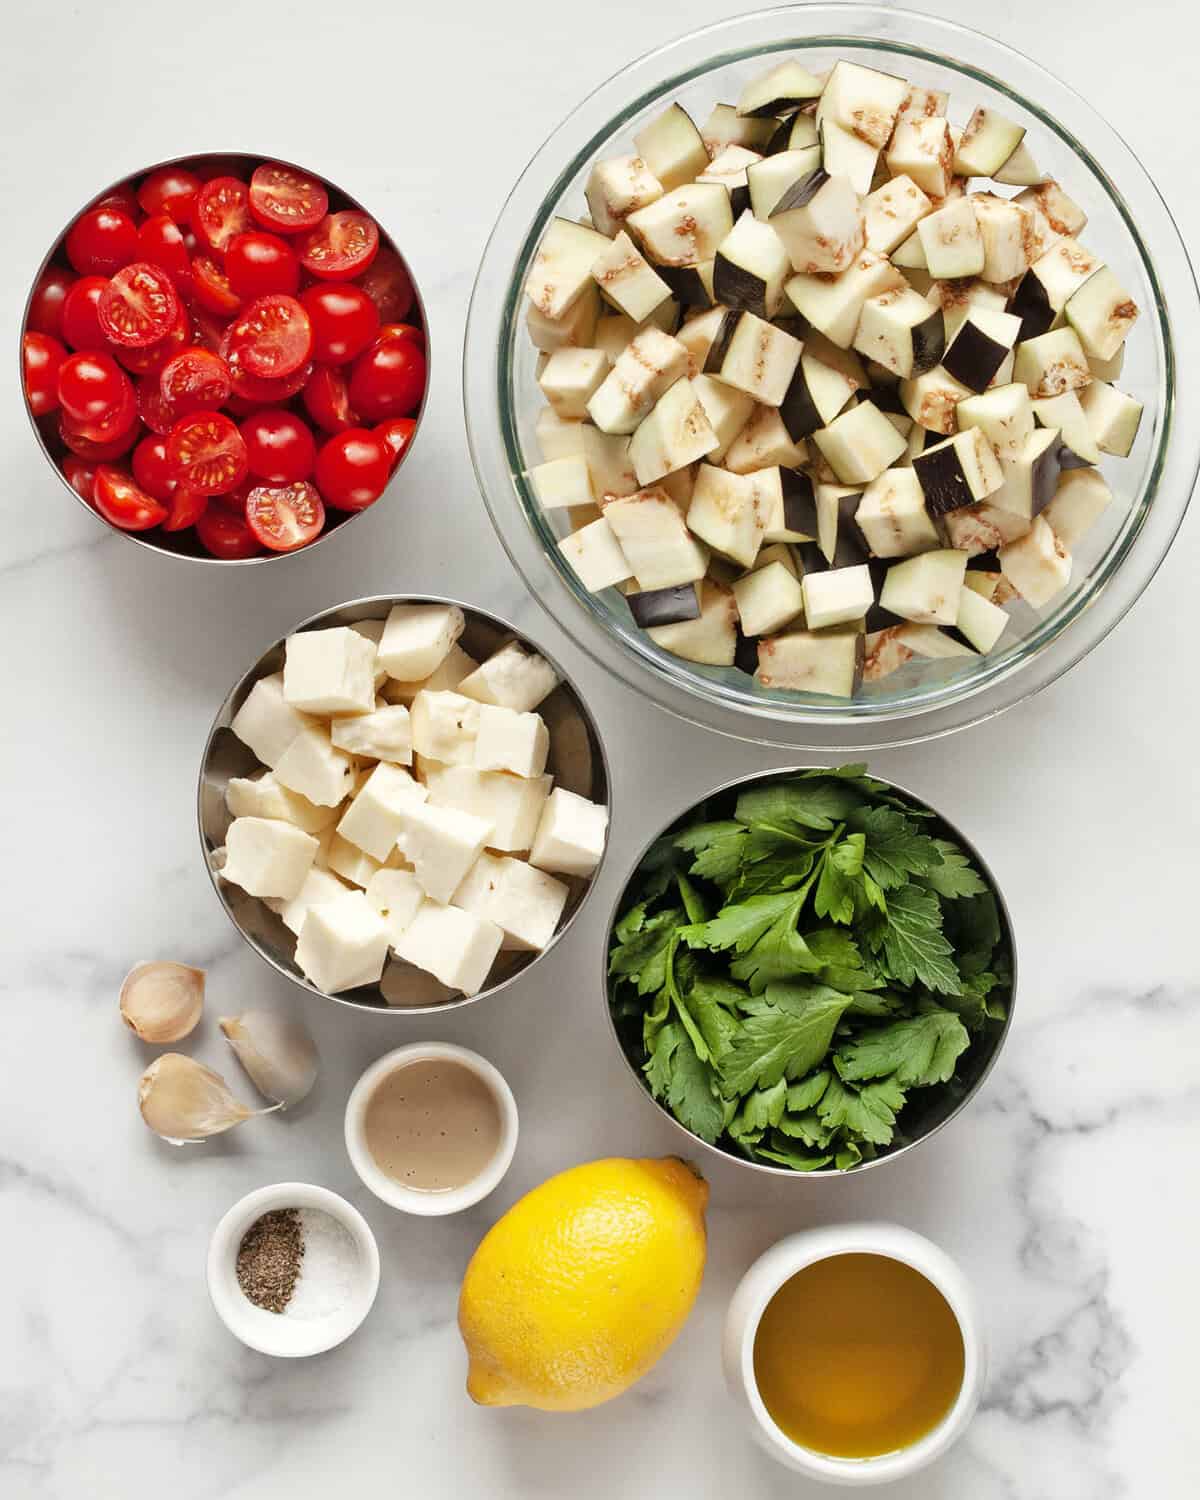 Ingredients including eggplant, tomatoes, halloumi, lemon, garlic, parsley, salt, pepper and olive oil.